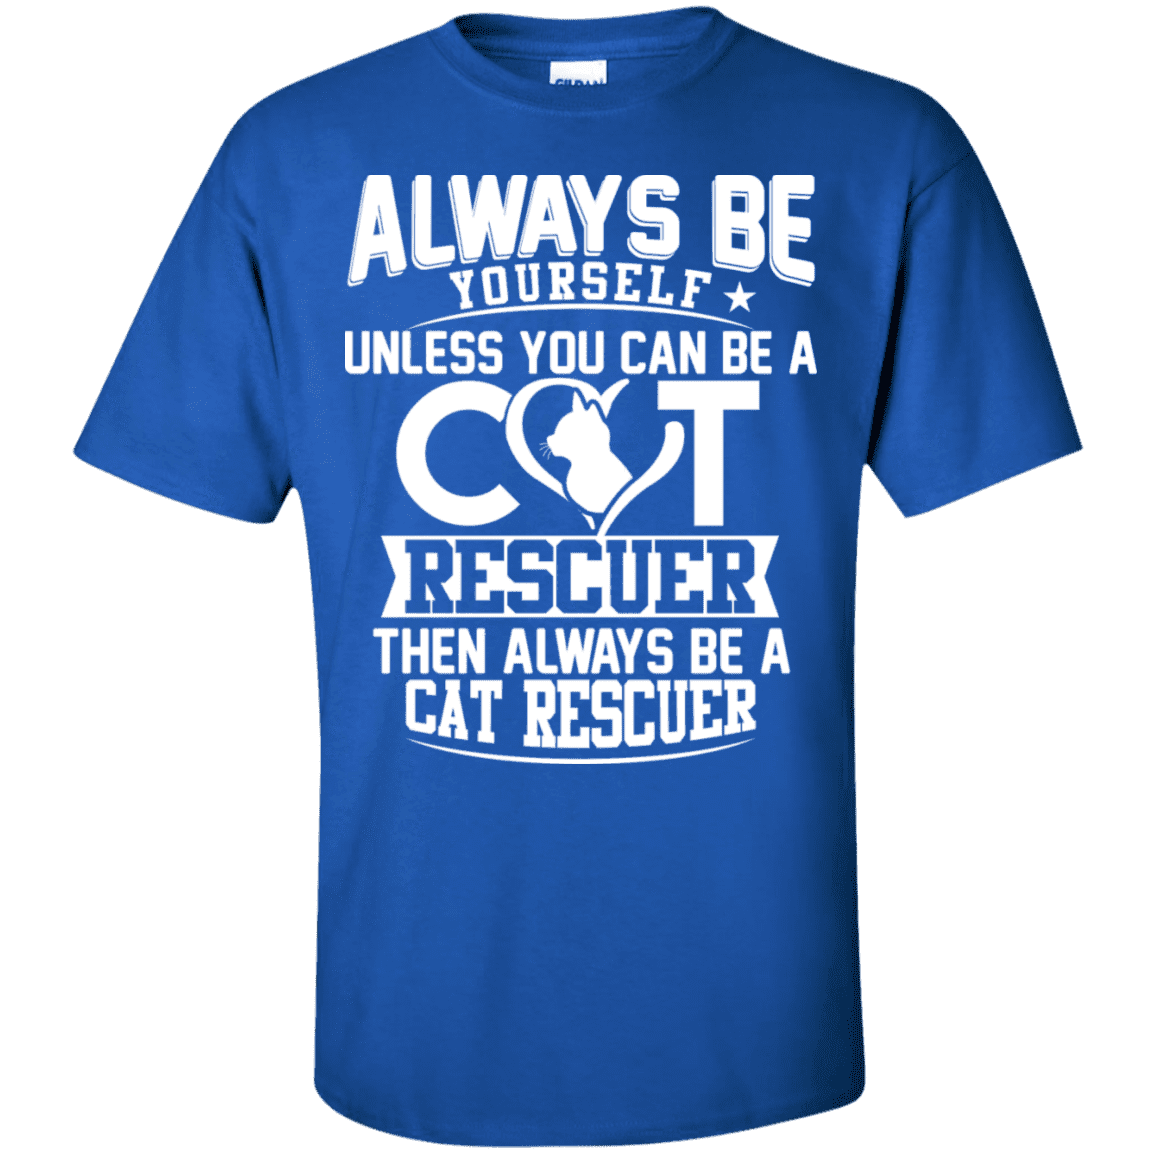 Always Be A Cat Rescuer - T Shirt.